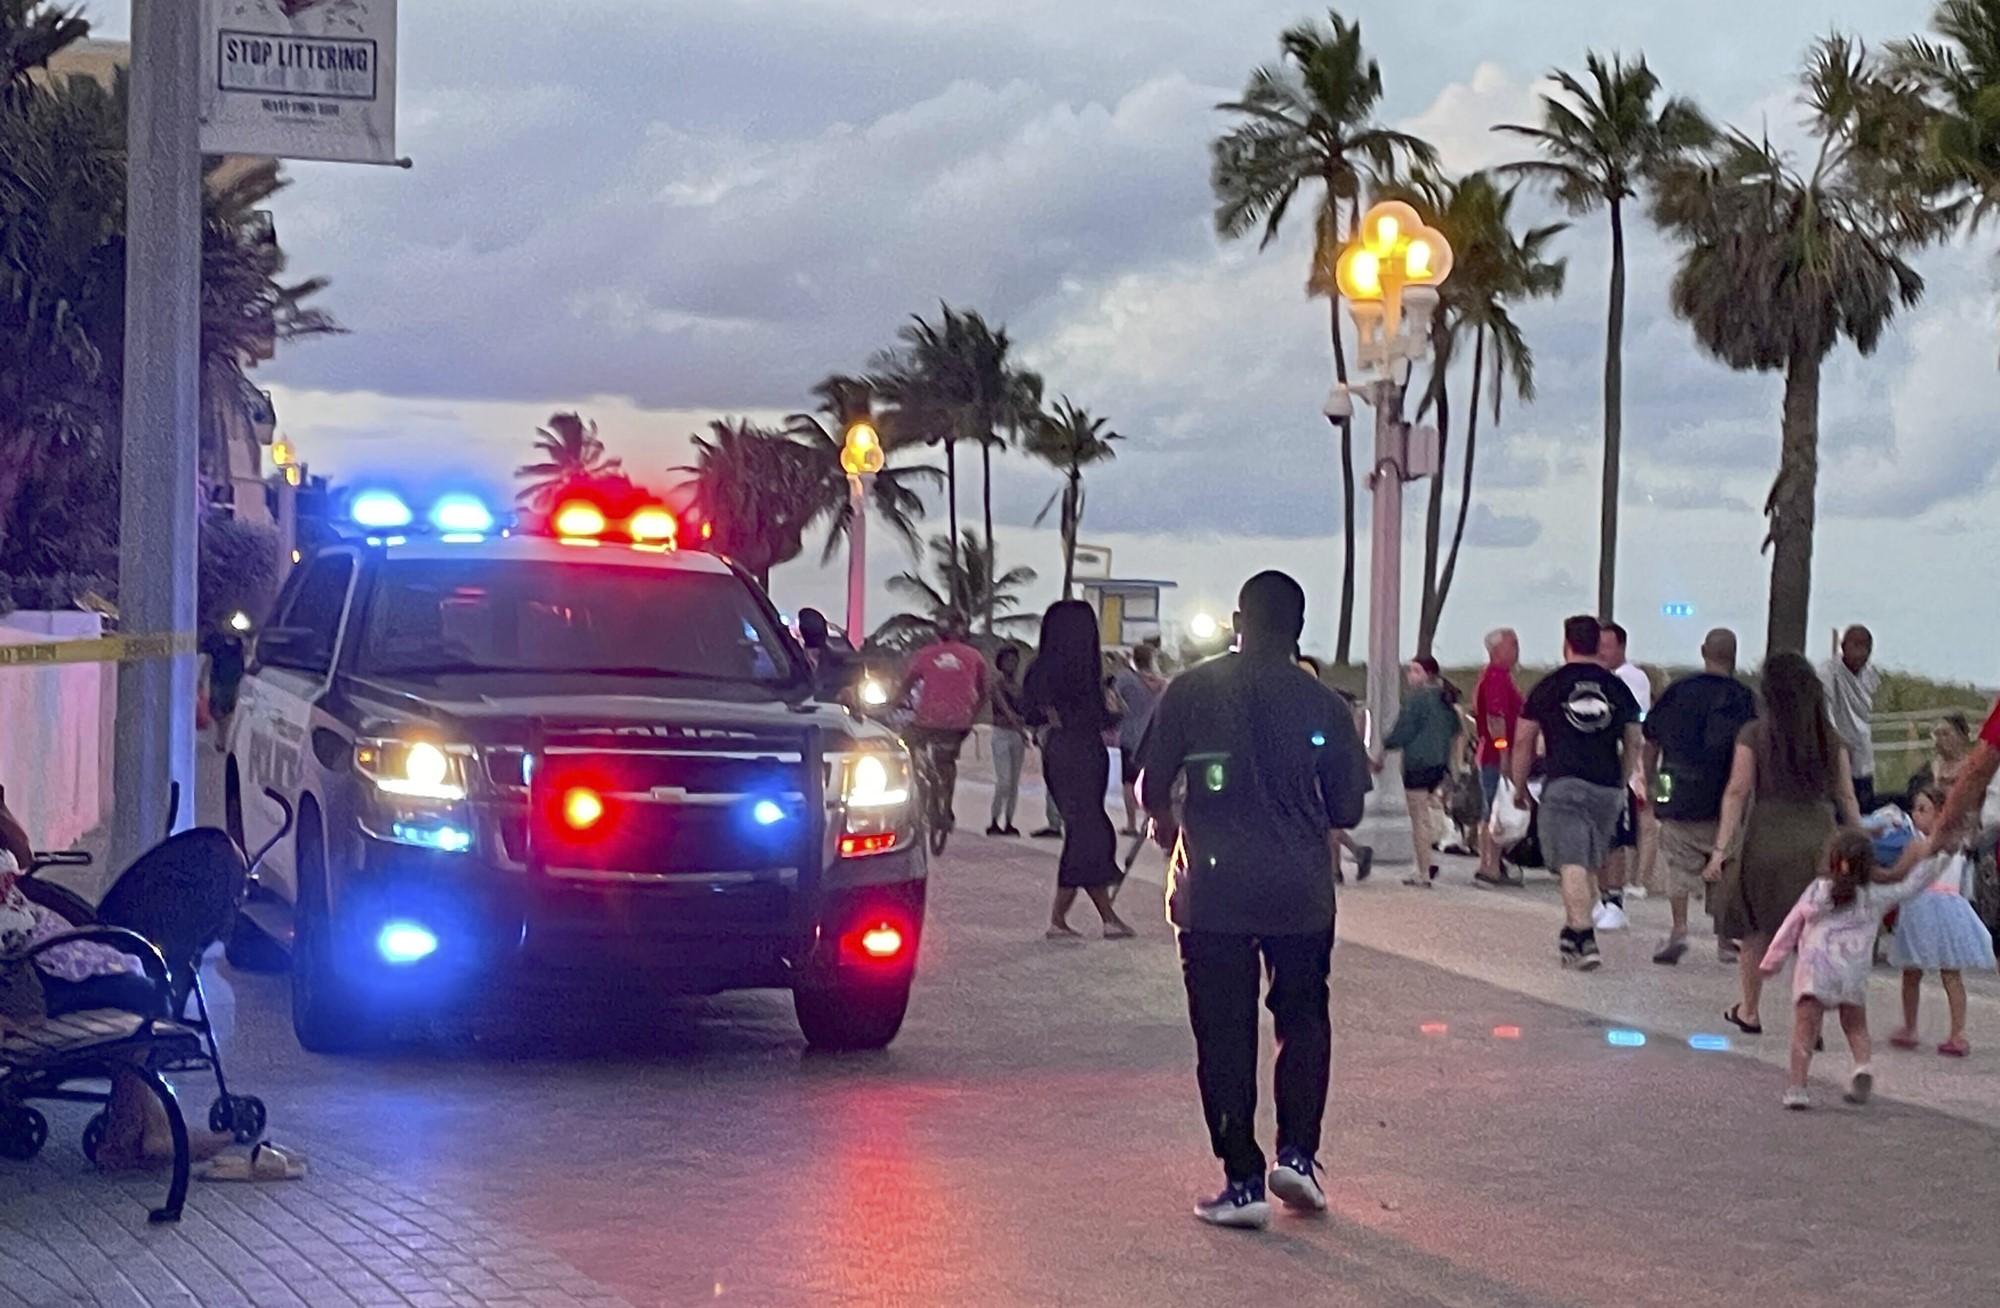 A police vehicle on a beach boardwalk, as people walk around it